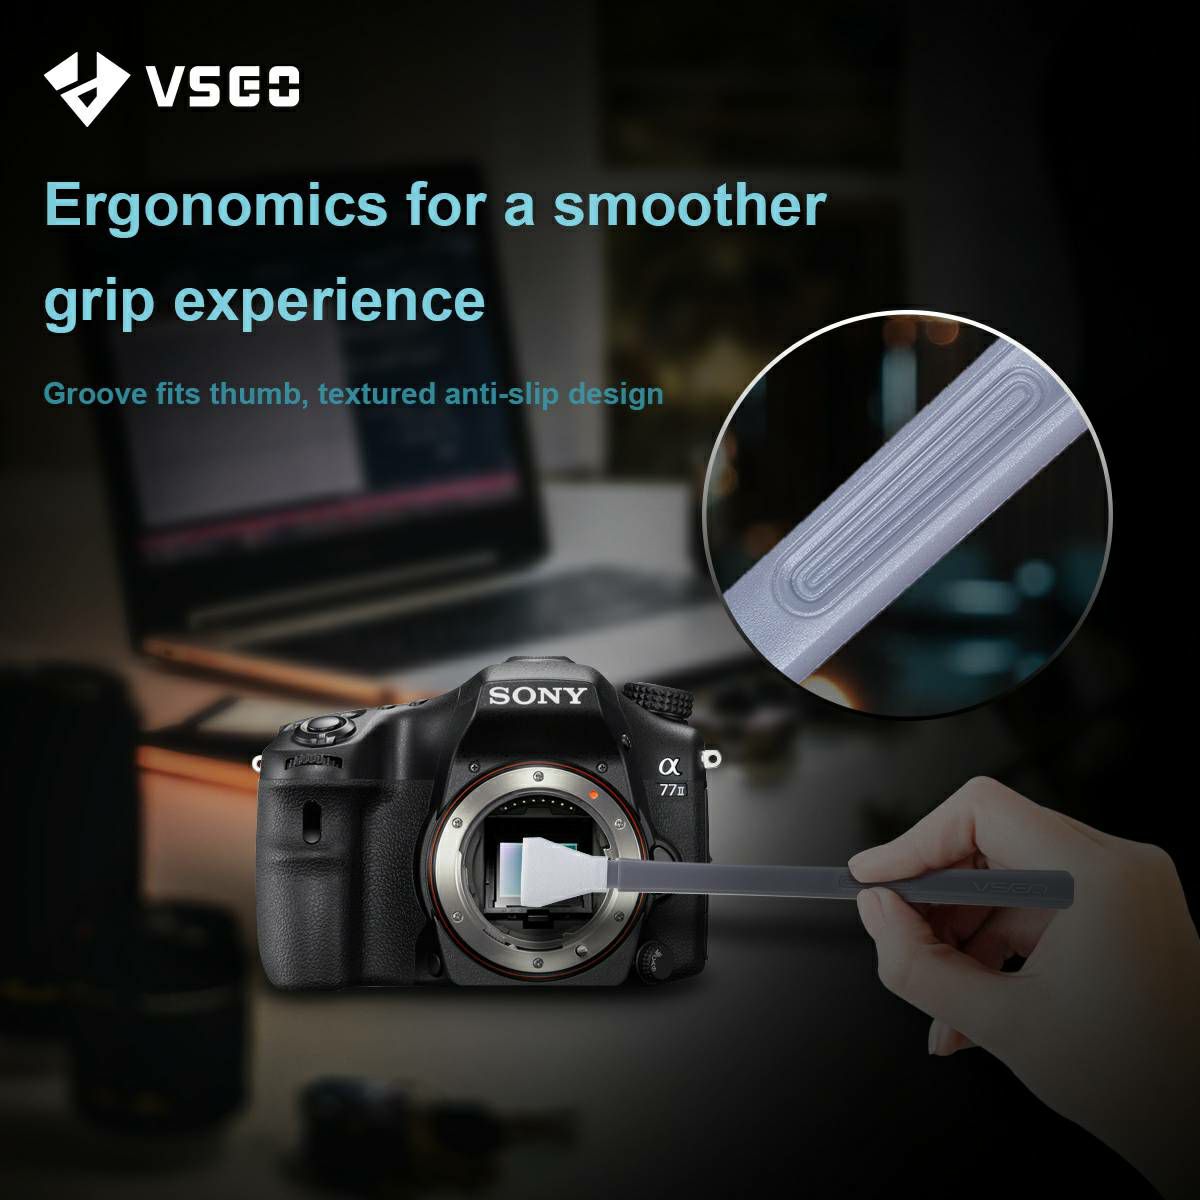 VSGO VS-S02E Sensor Cleaning Rod Kit 10x špahtlica i 1x10ml tekućina za čišćenje APS-C senzora